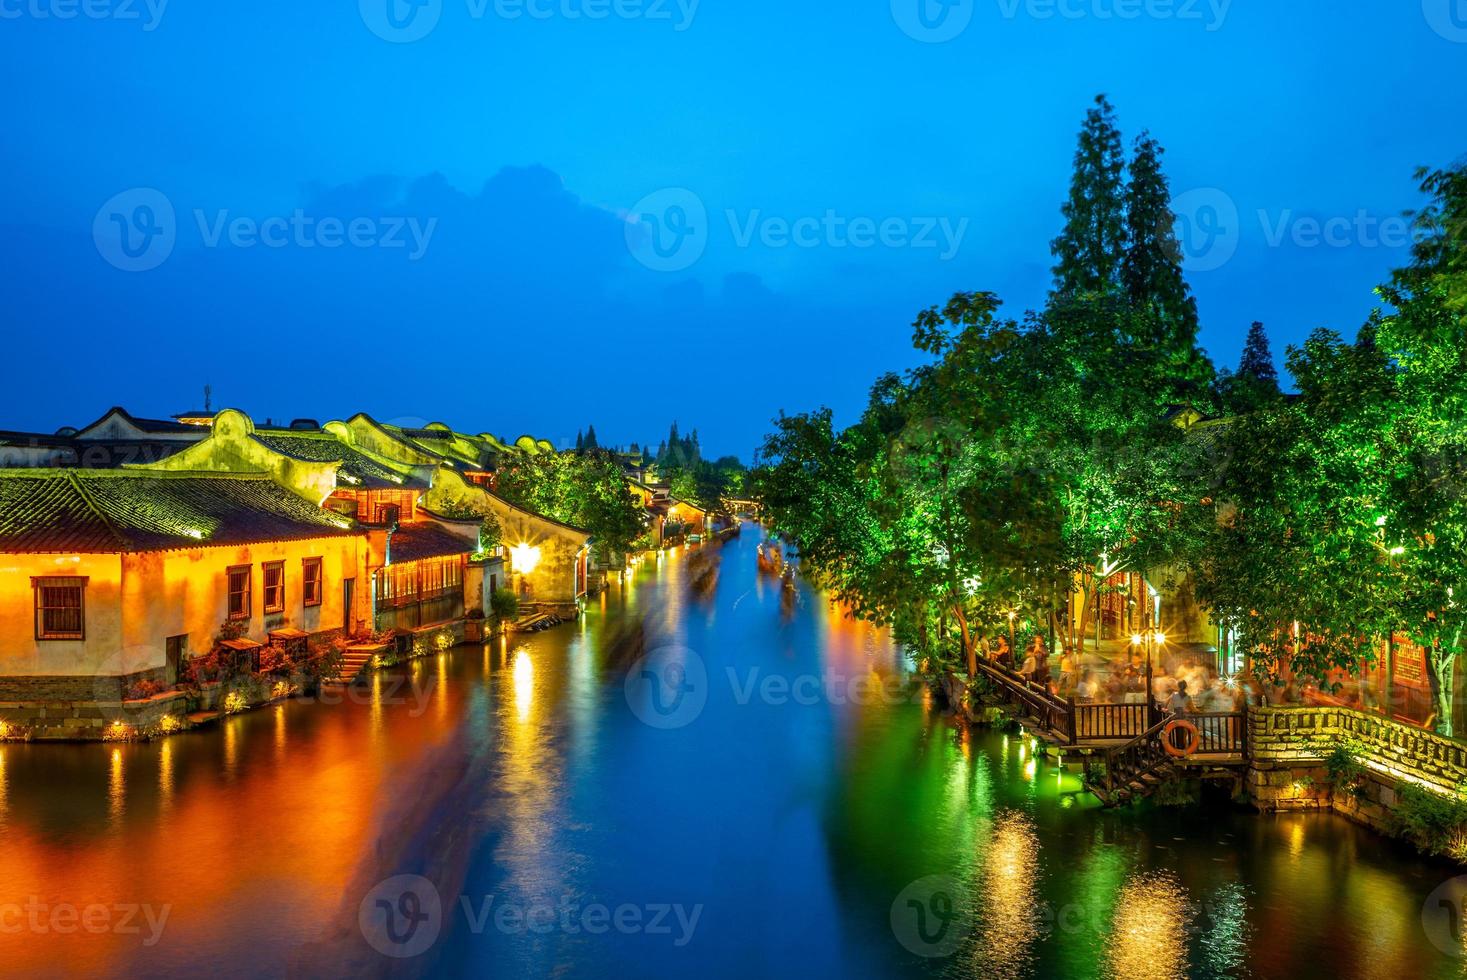 stadsgezicht van wuzhen, een historische schilderachtige stad in china foto